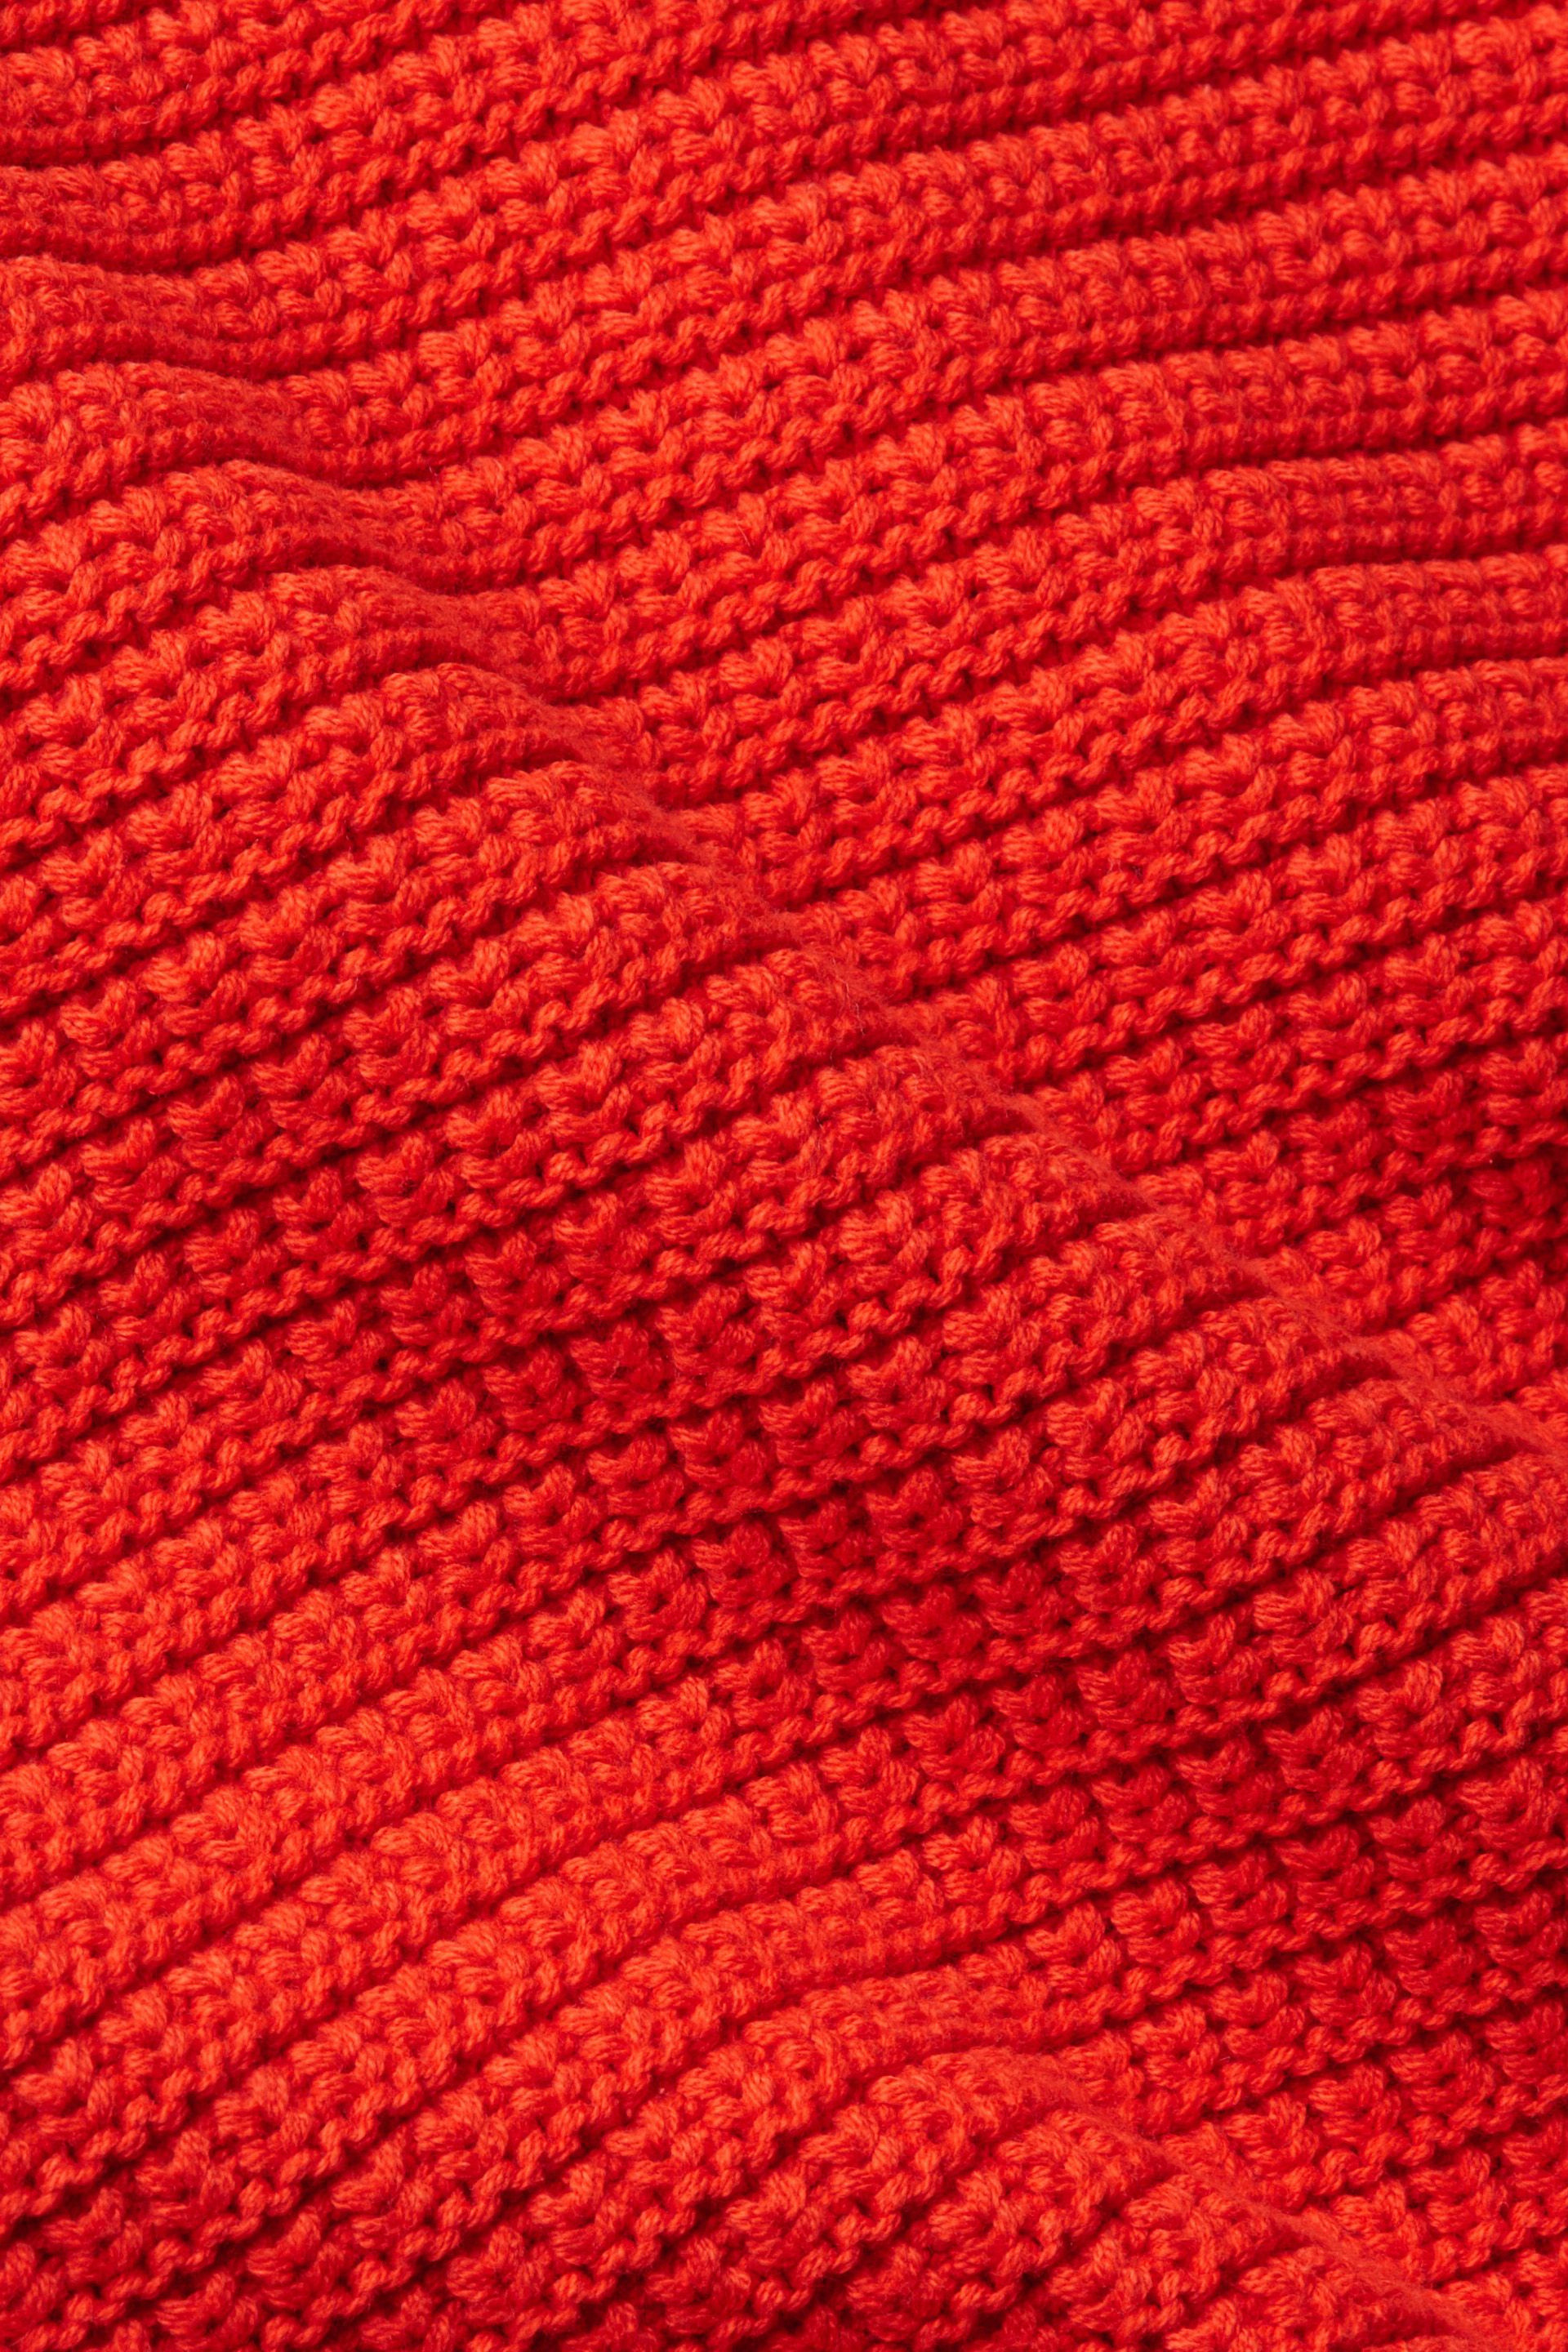 Esprit - Knitted vest in cotton blend, Red, large image number 3